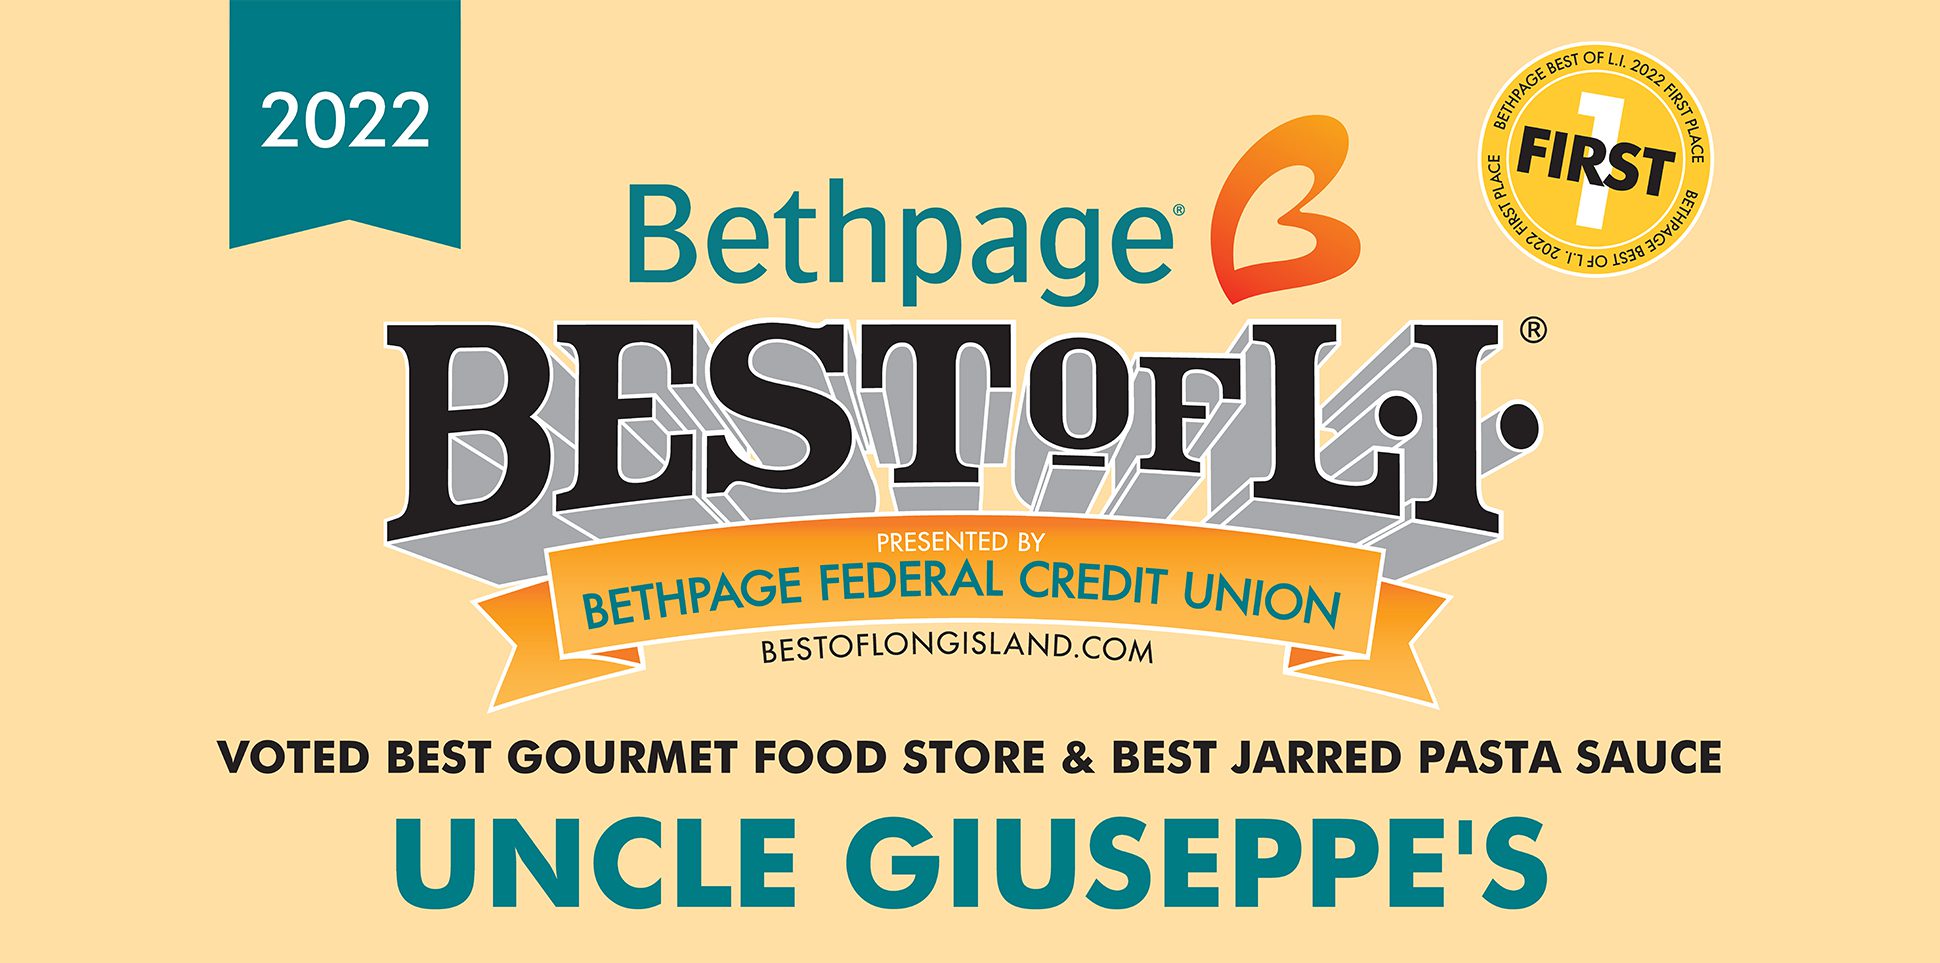 Best Of Long Island 2022 - Best Gourmet Food Store and Best Jarred Pasta Sauce